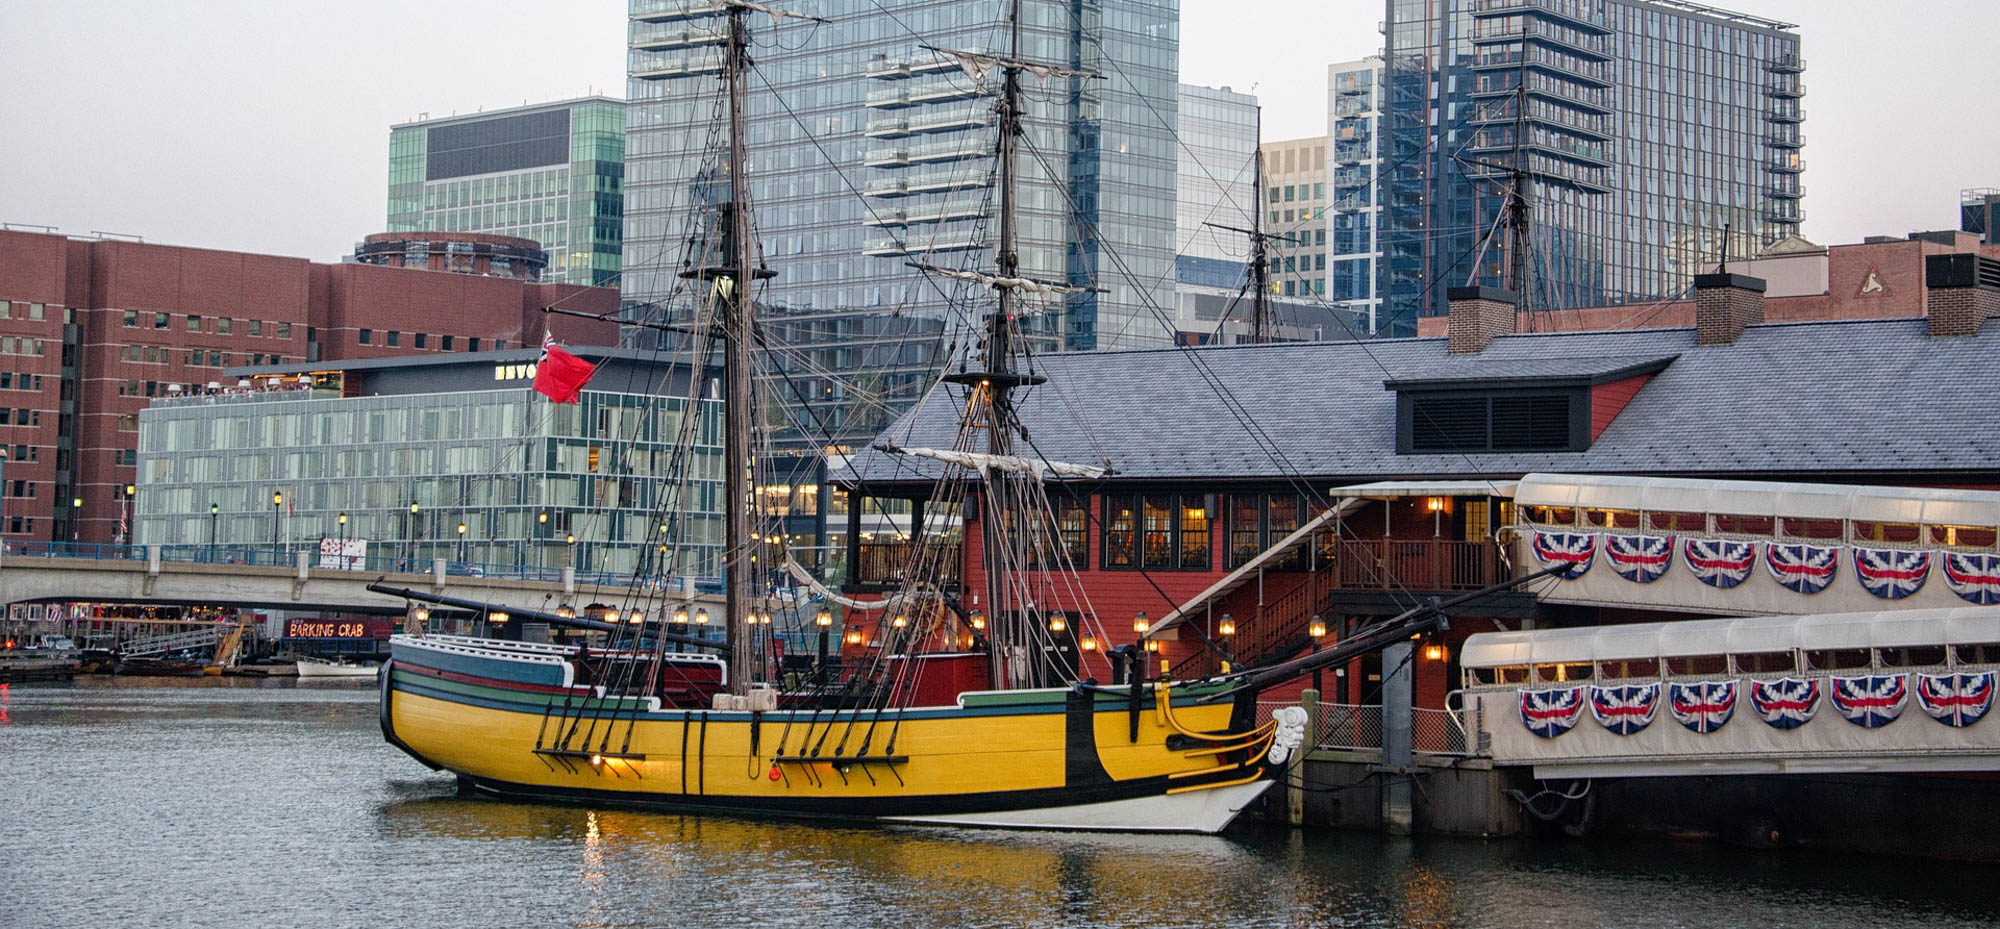 Boston harbor with historical ship